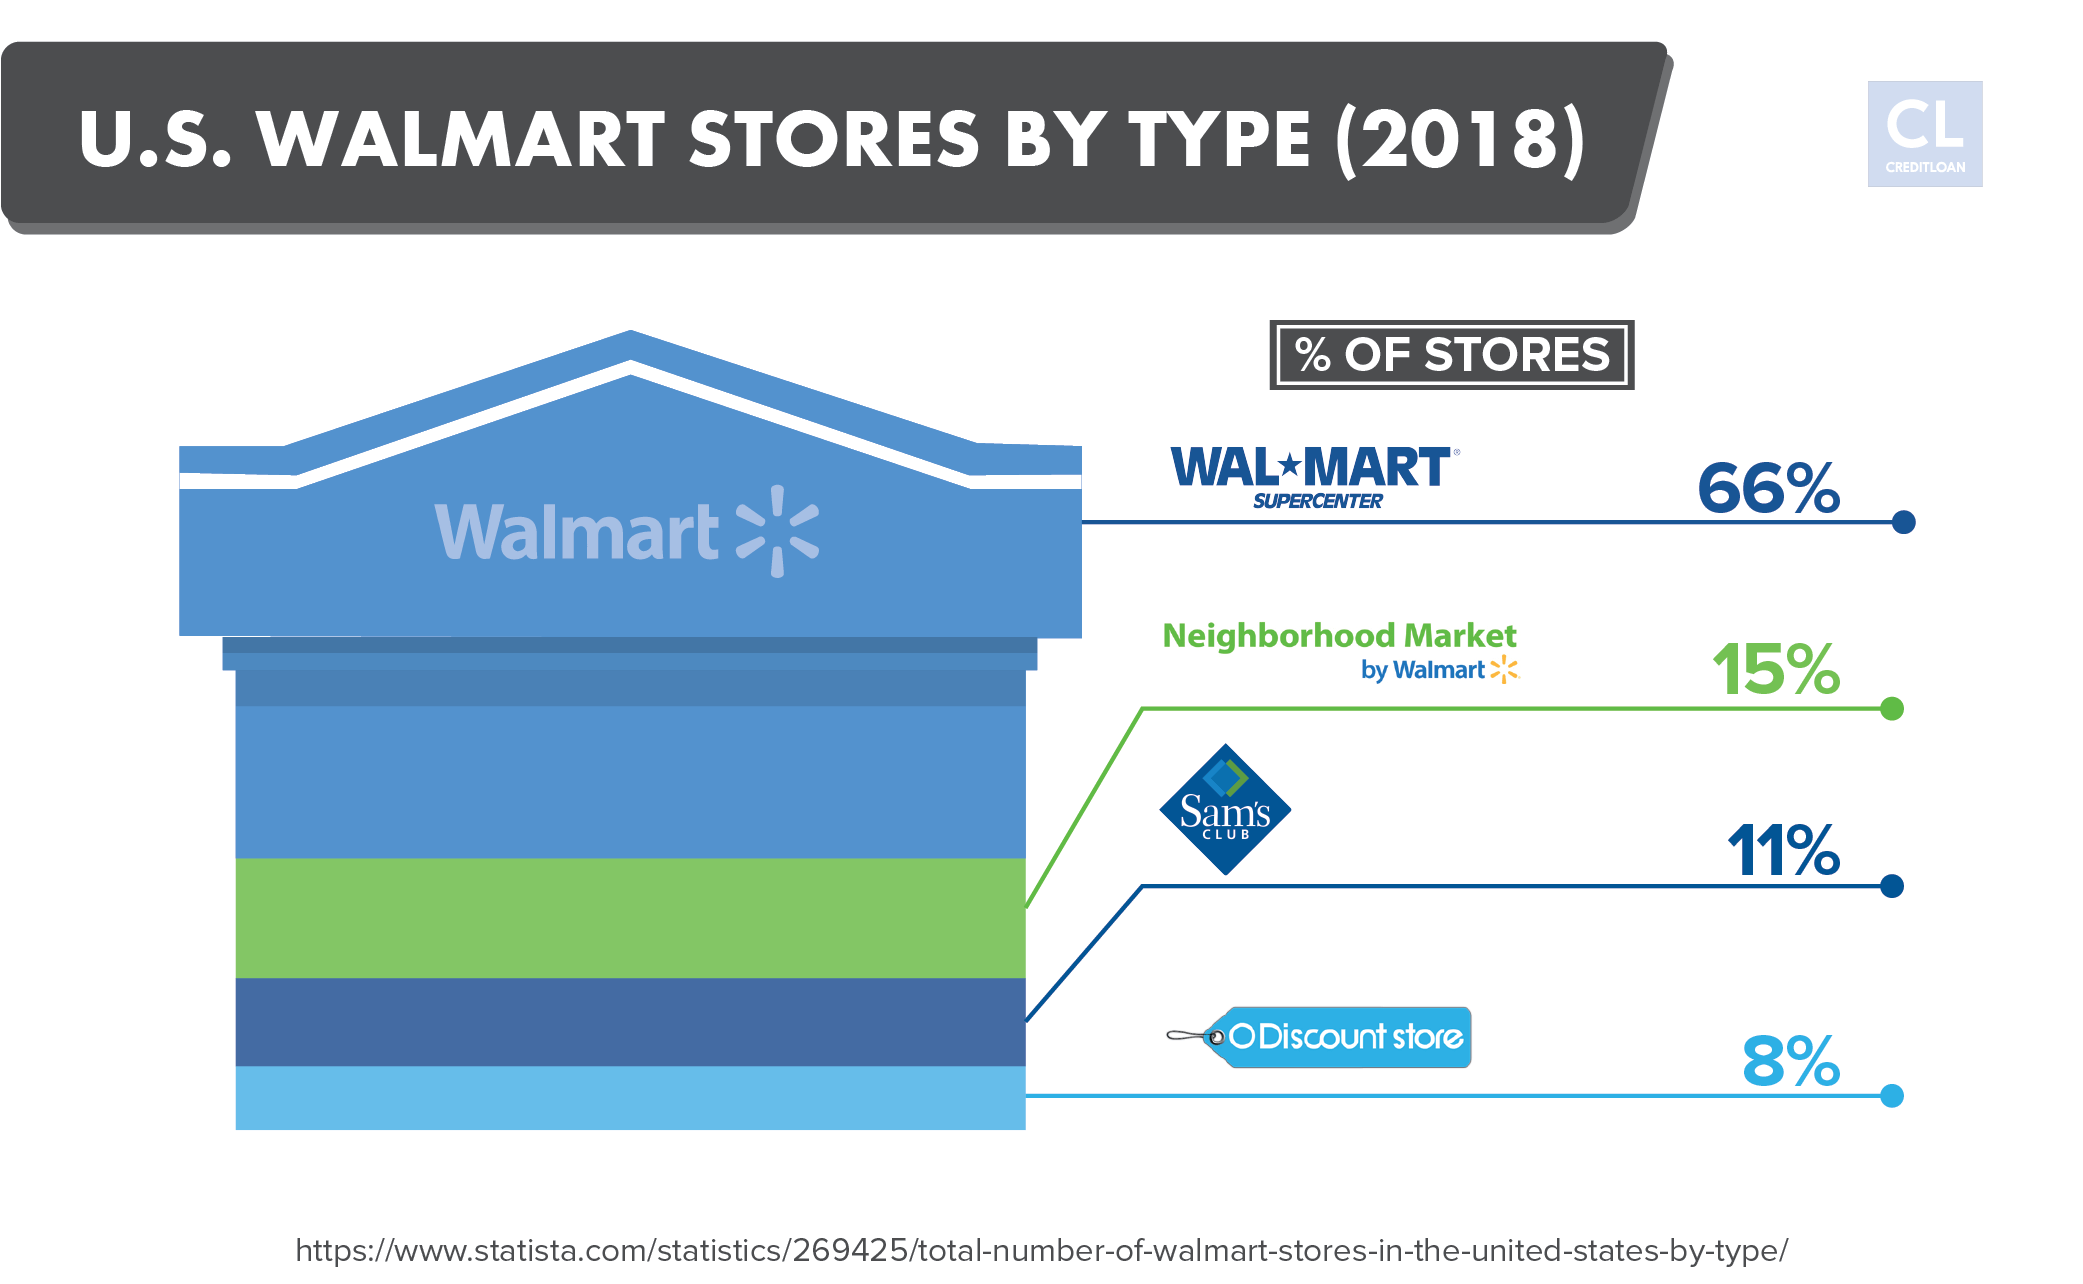 U.S. Walmart Stores by Type 2018